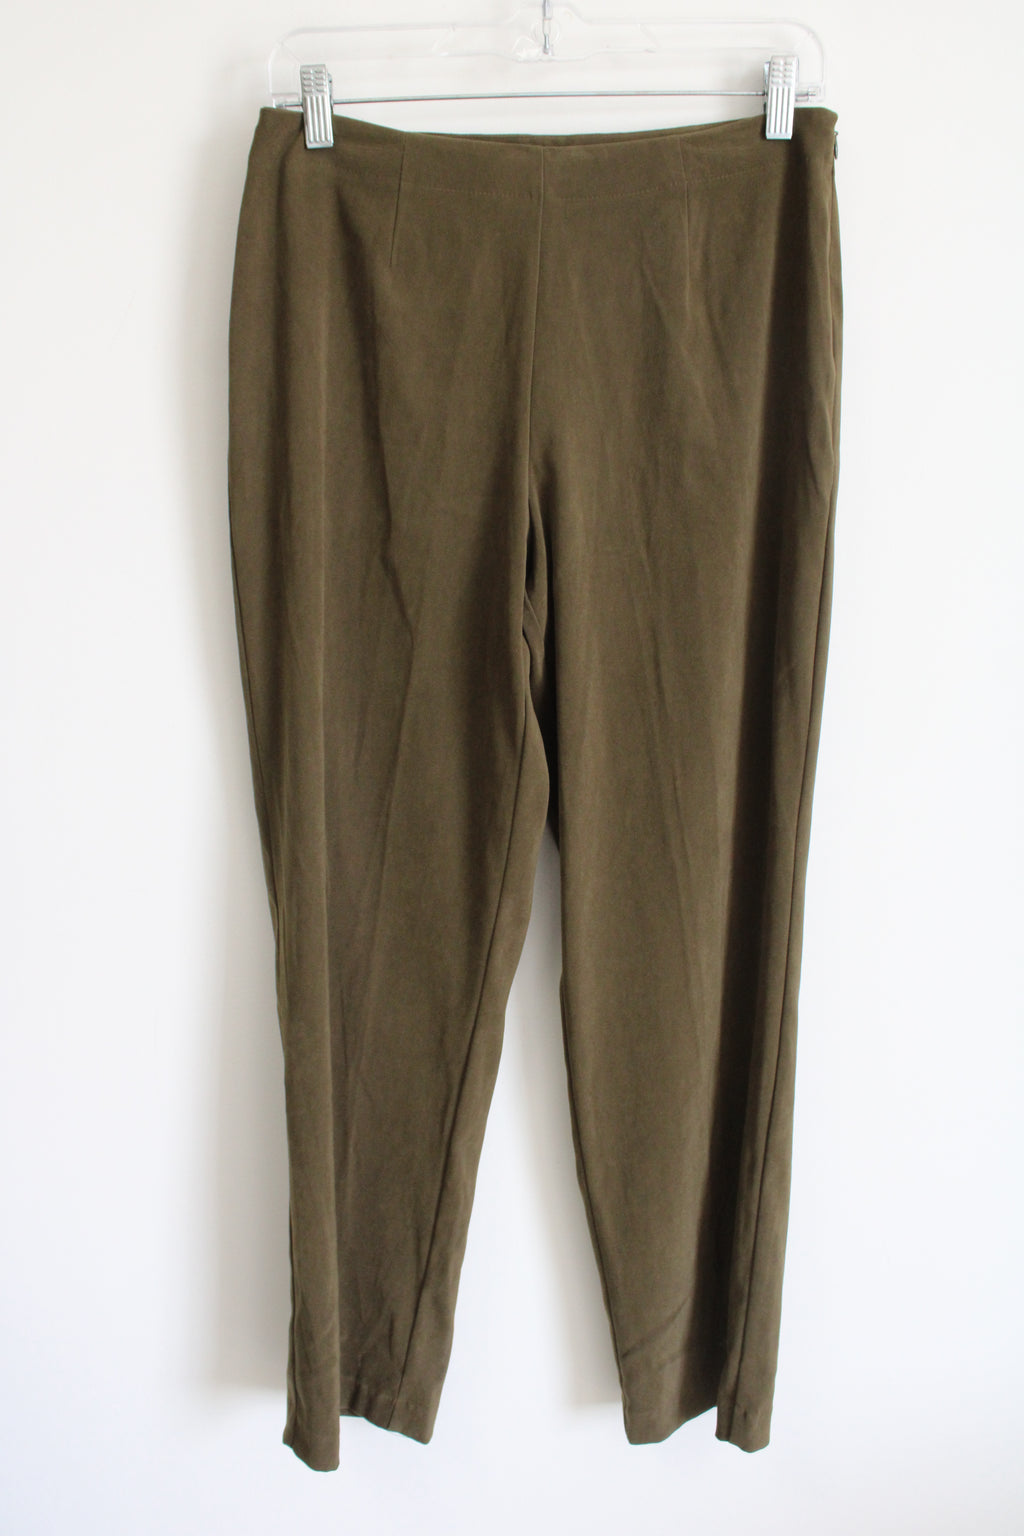 Sag Harbor Olive Green Trouser Sueded Pants | 8 Petite